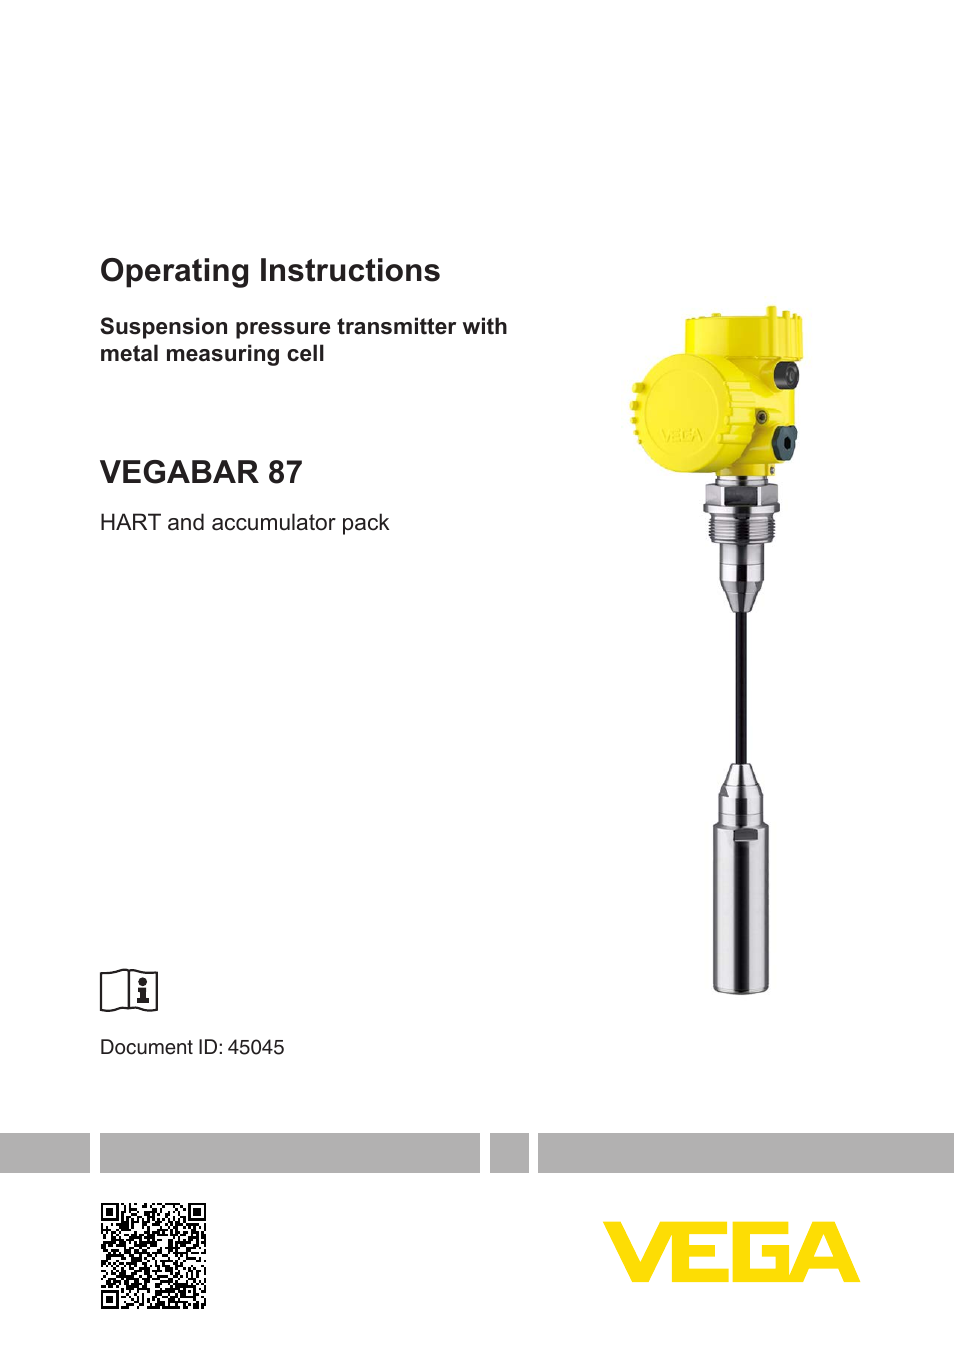 VEGABAR 87 HART and accumulator pack - Operating Instructions